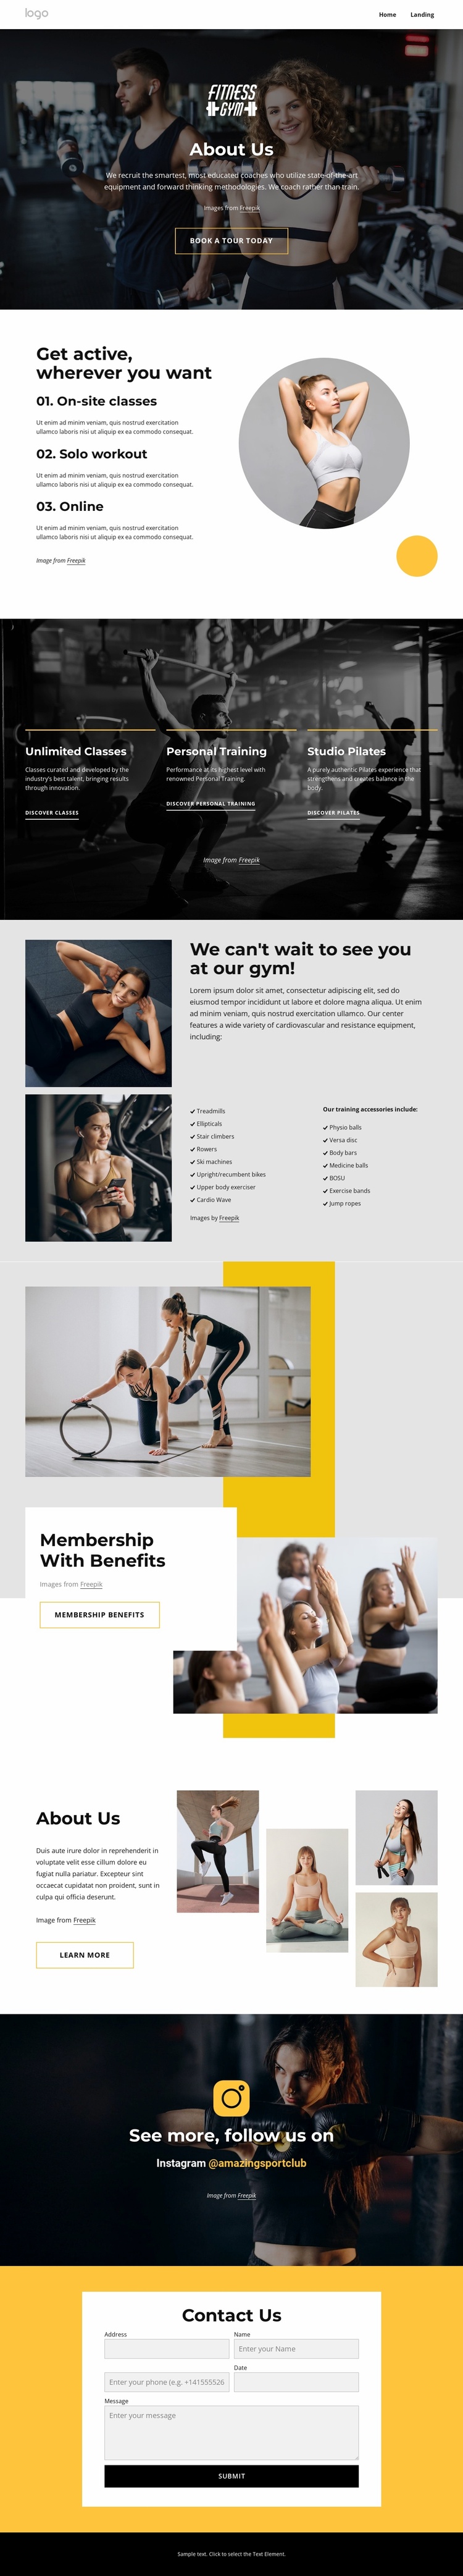 Sport and wellness center eCommerce Website Design